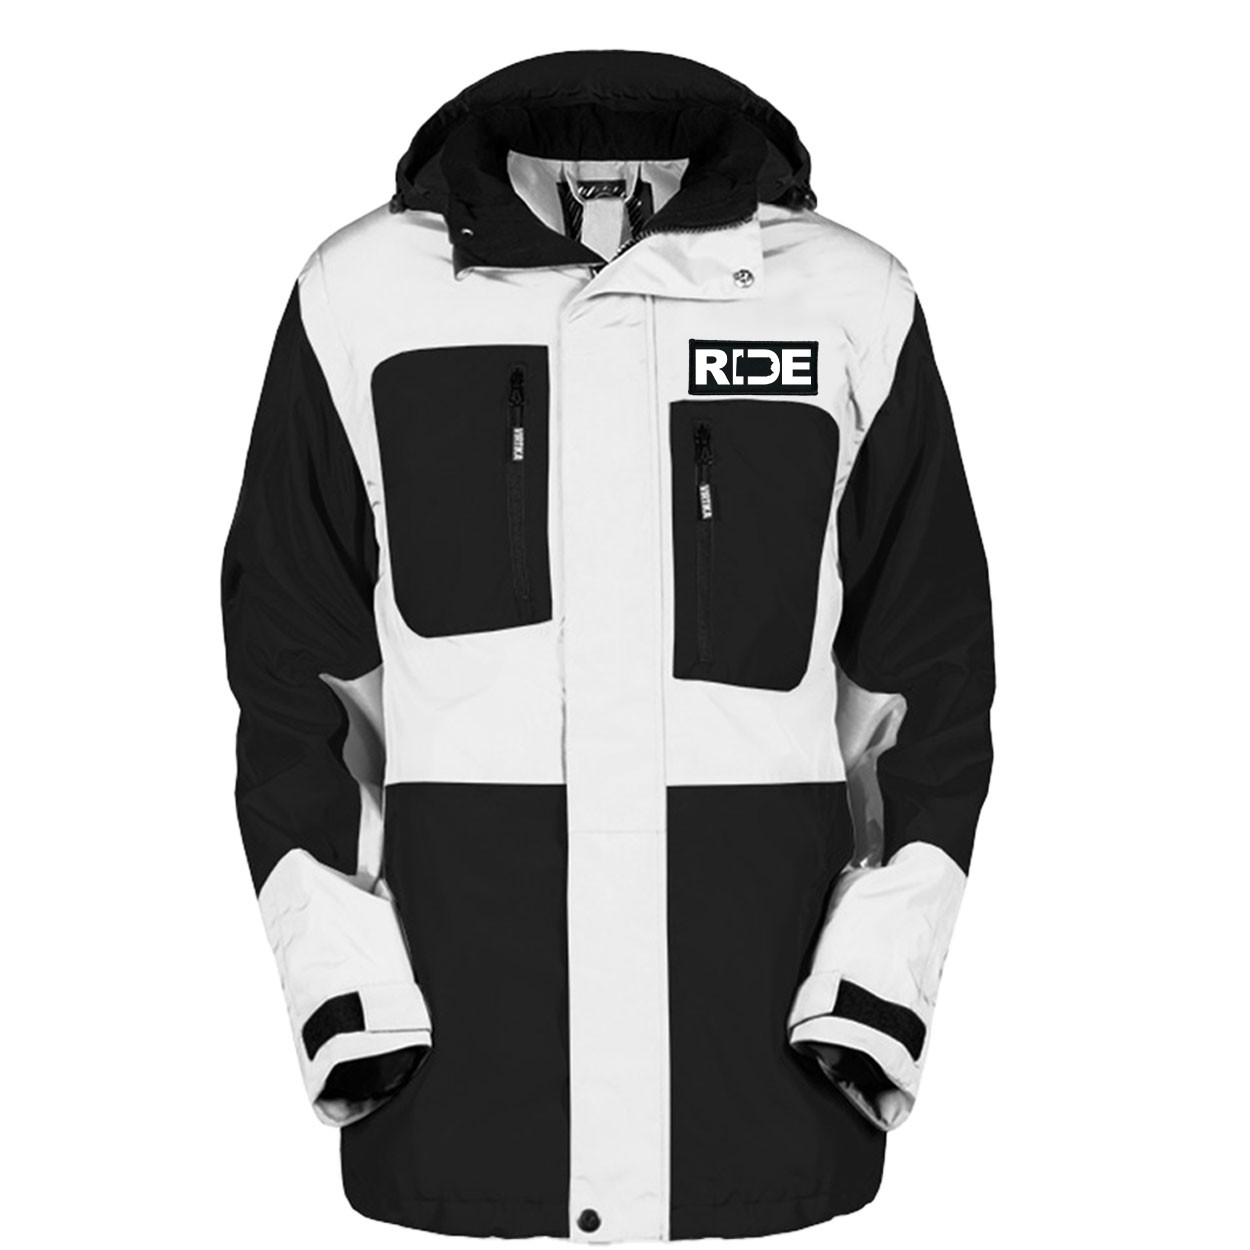 Ride Pennsylvania Classic Woven Patch Pro Snowboard Jacket (Black/White)